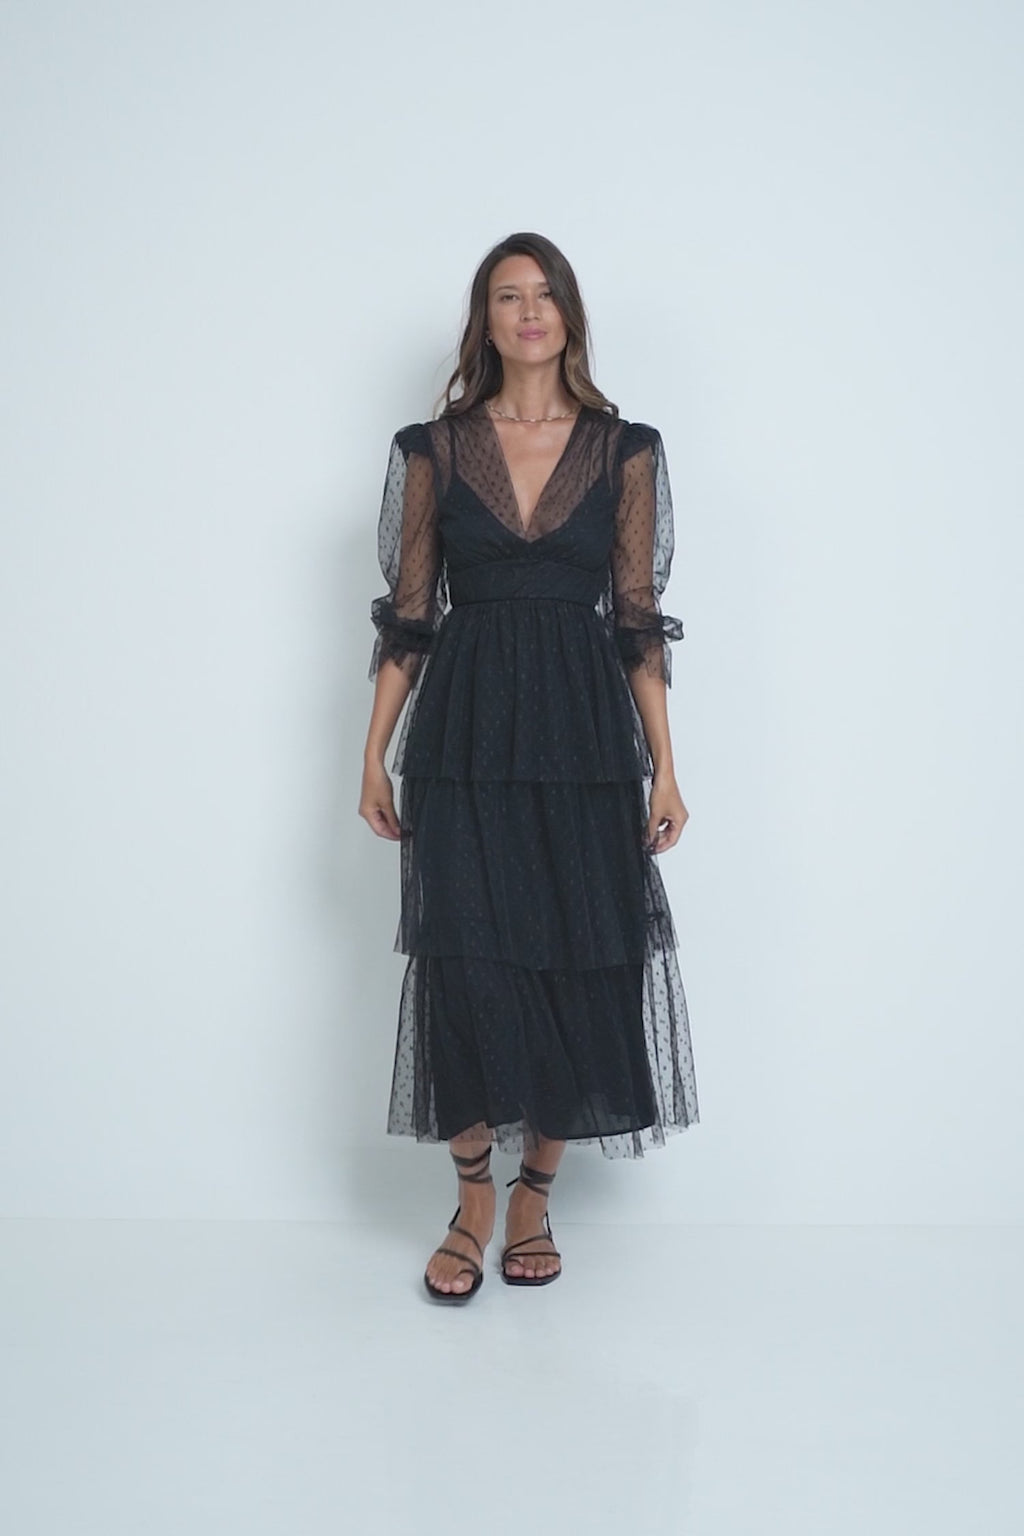 A model wearing an elegant black lace maxi dress